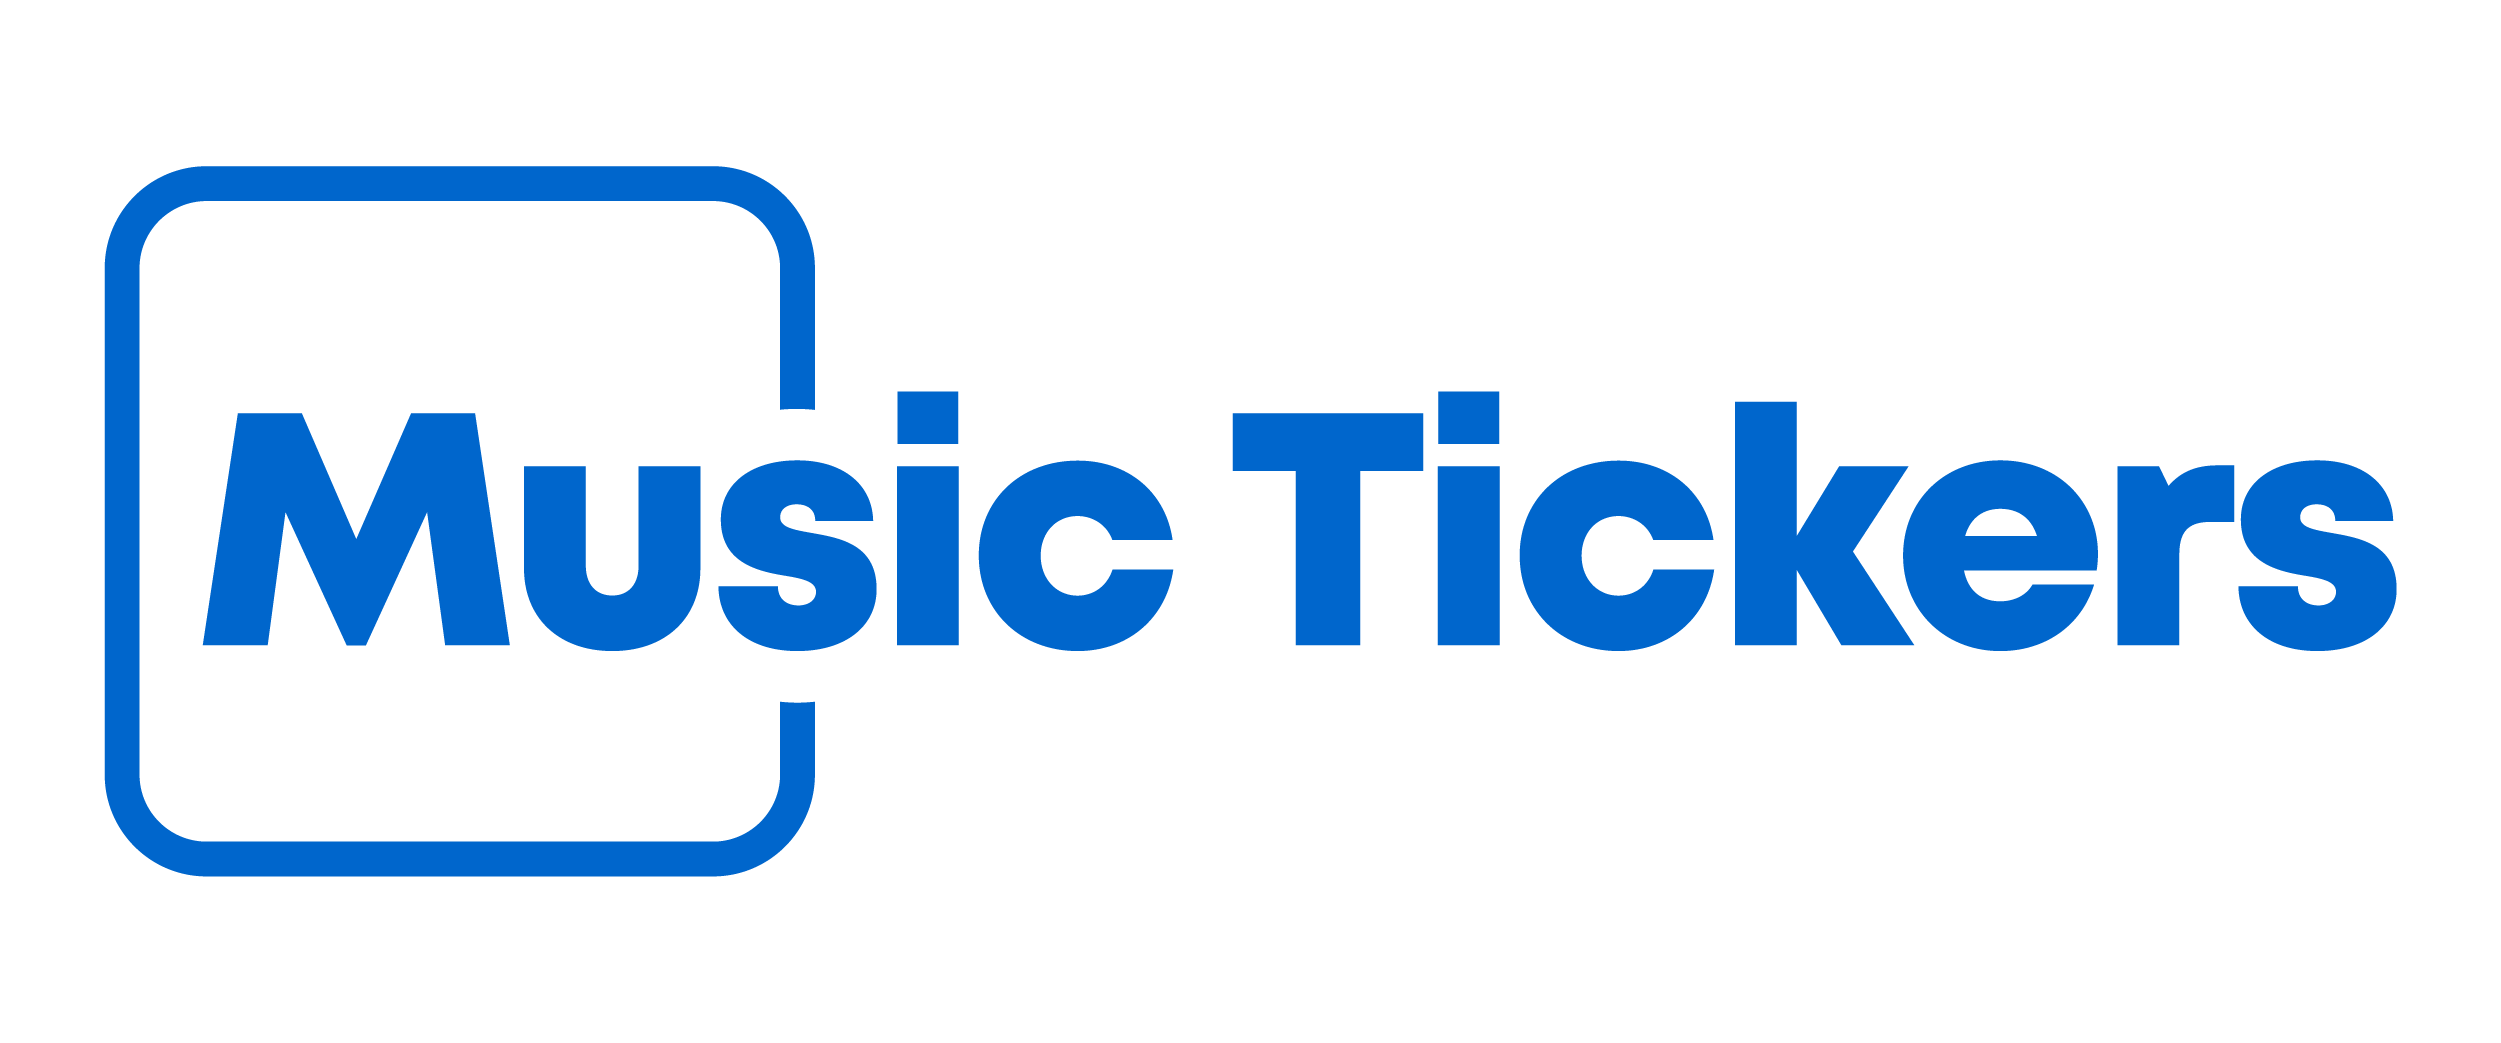 MusicTickers Logo